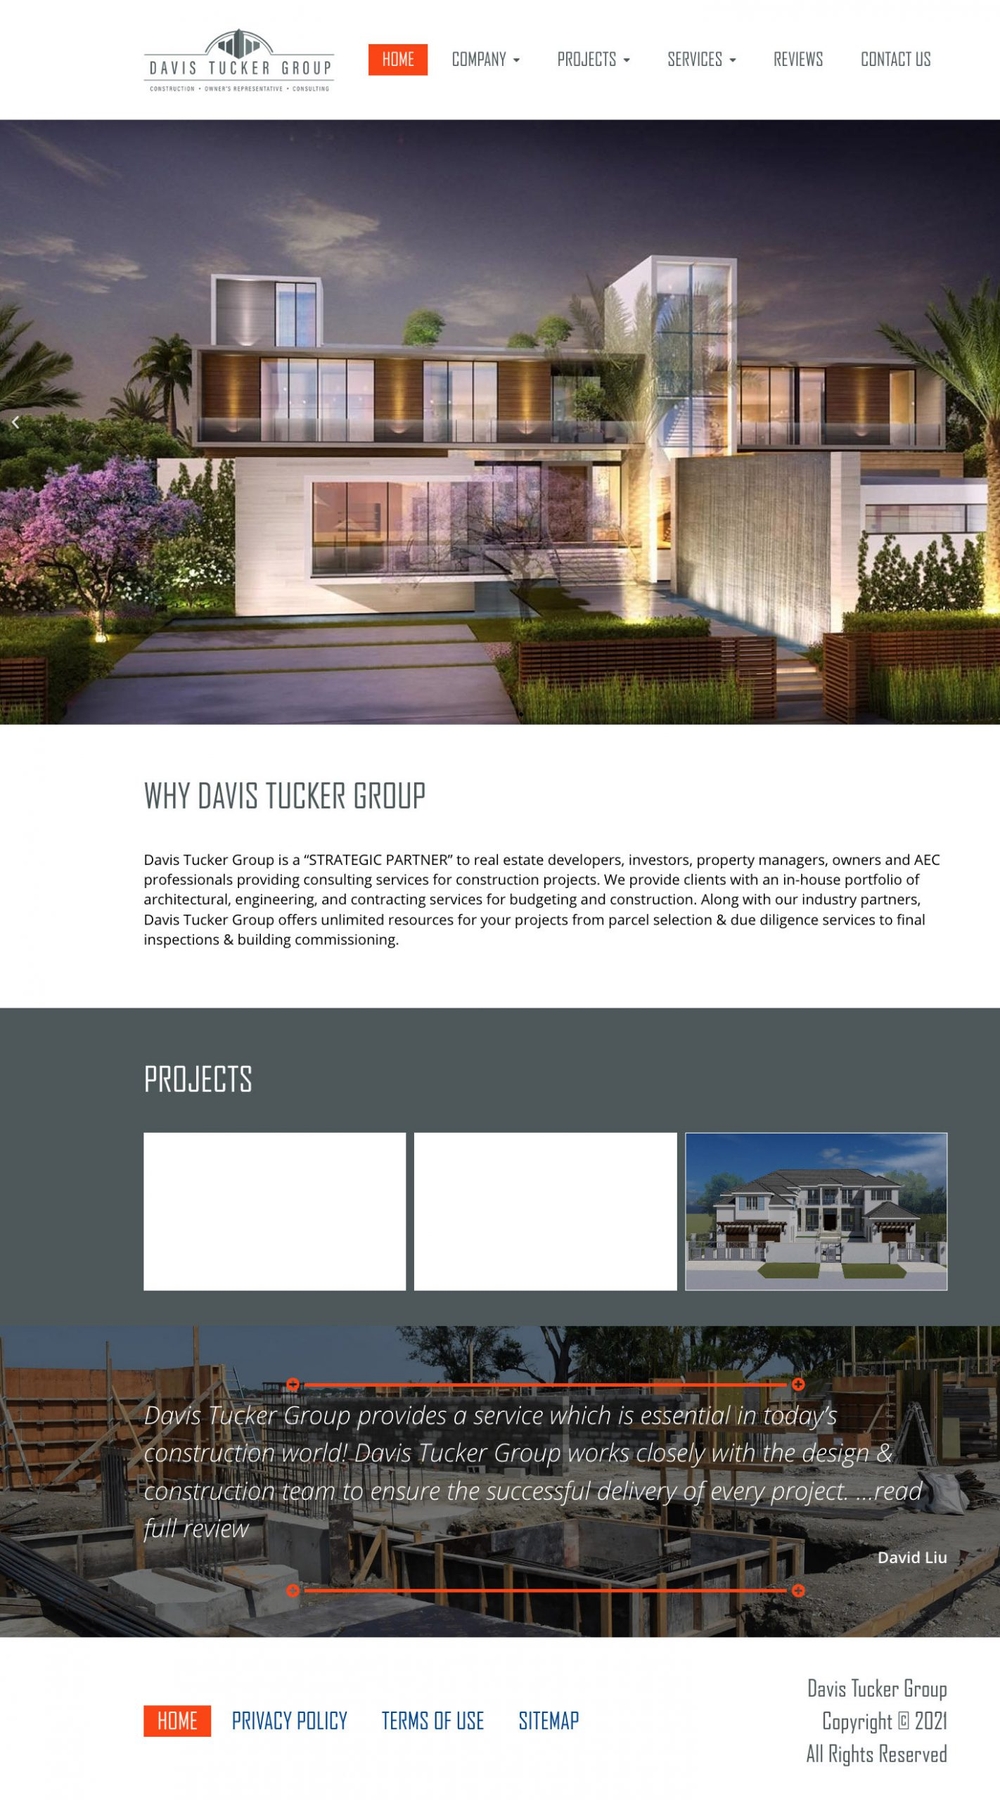 Davis Tucker Group's home page